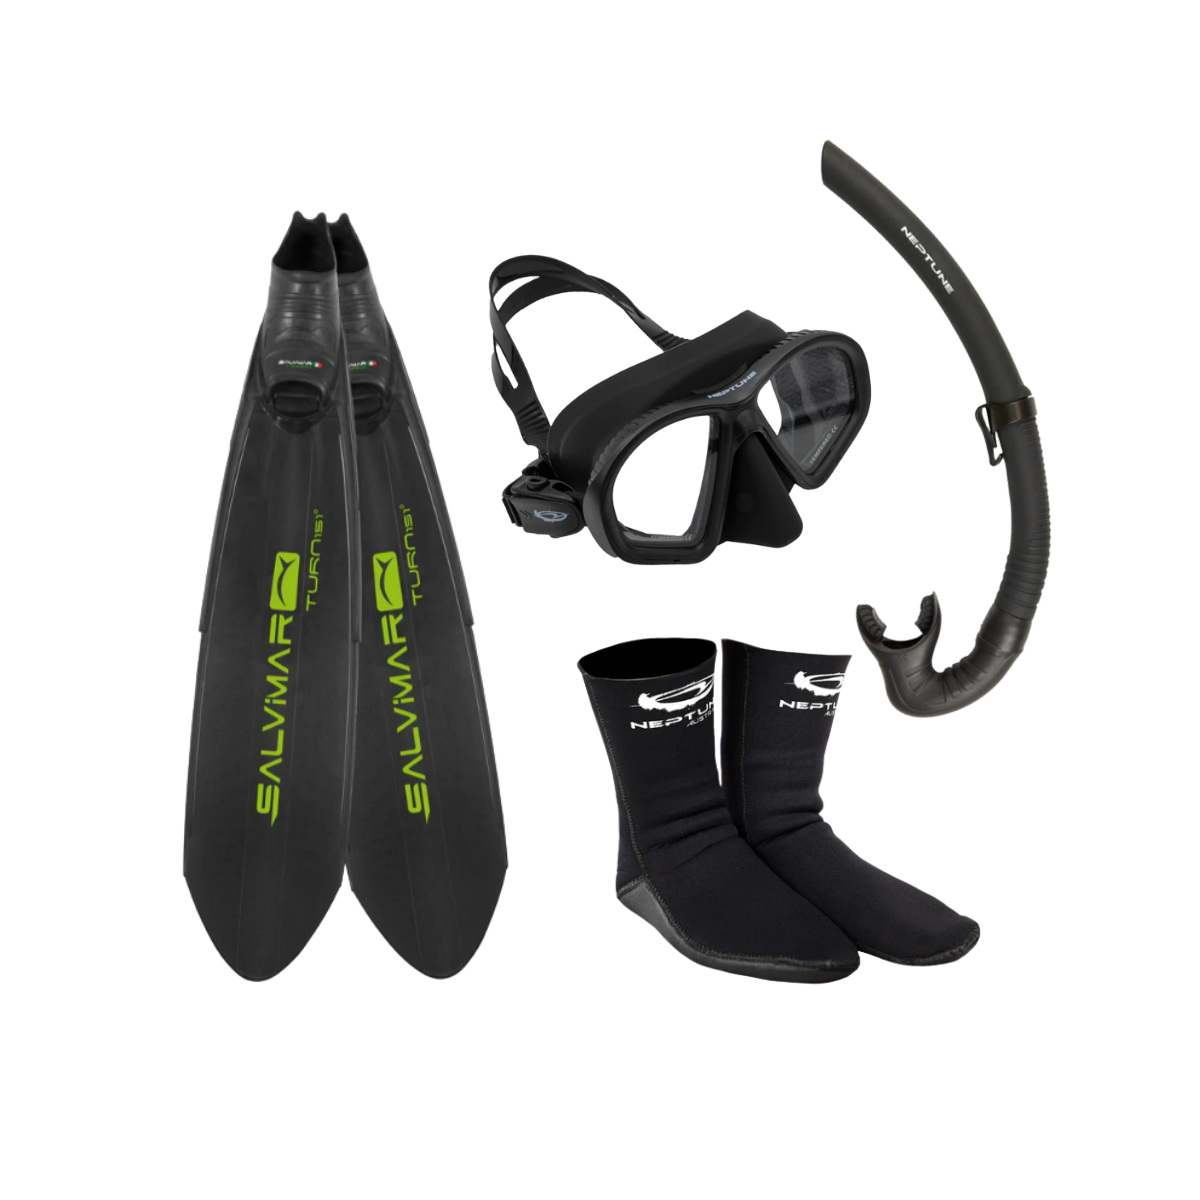 Salvimar Fins With Neptune M4 Mask, Snorkel & 3mm Socks